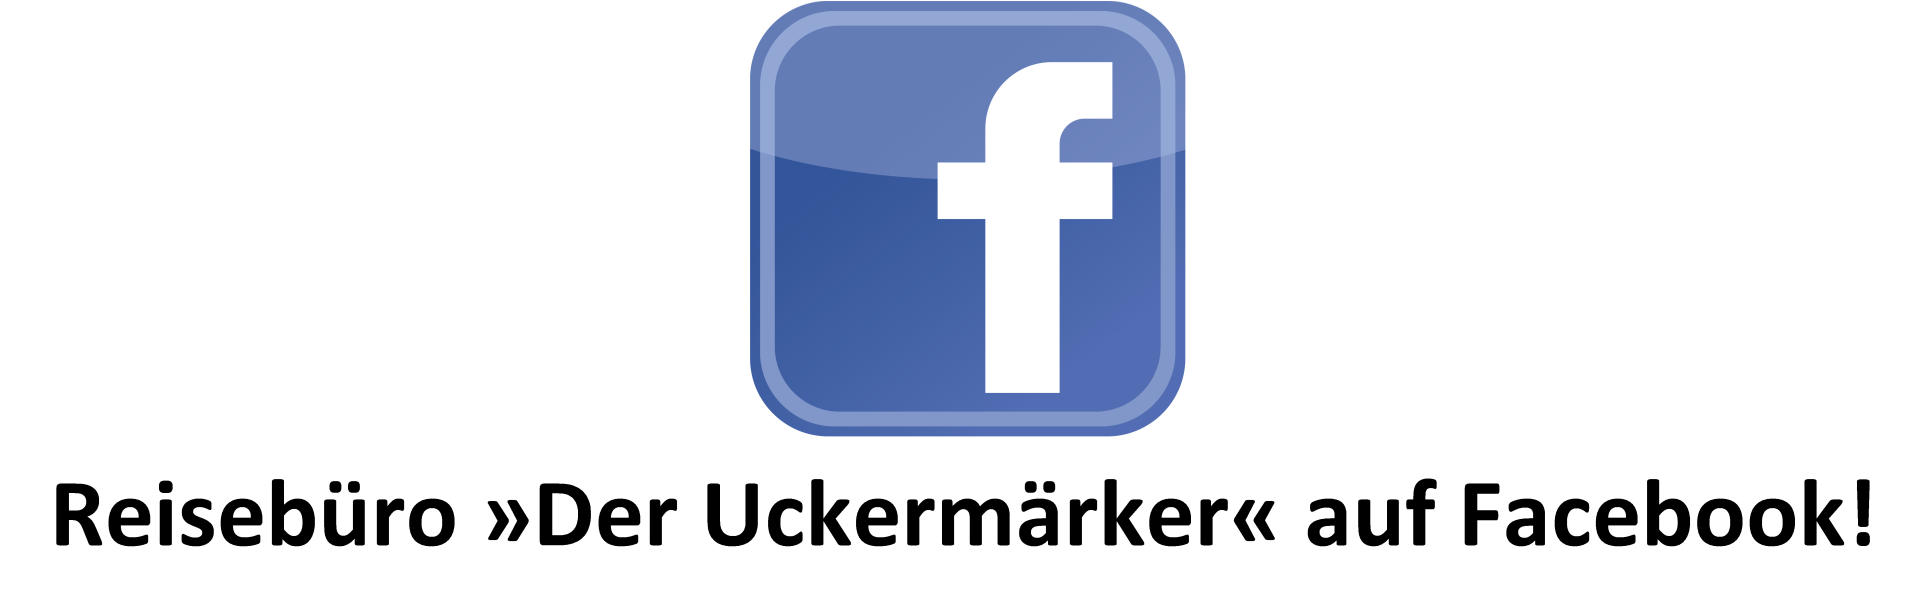 http://www.facebook.com/pages/Reiseb%C3%BCro-der-Uckerm%C3%A4rker/151940834846191